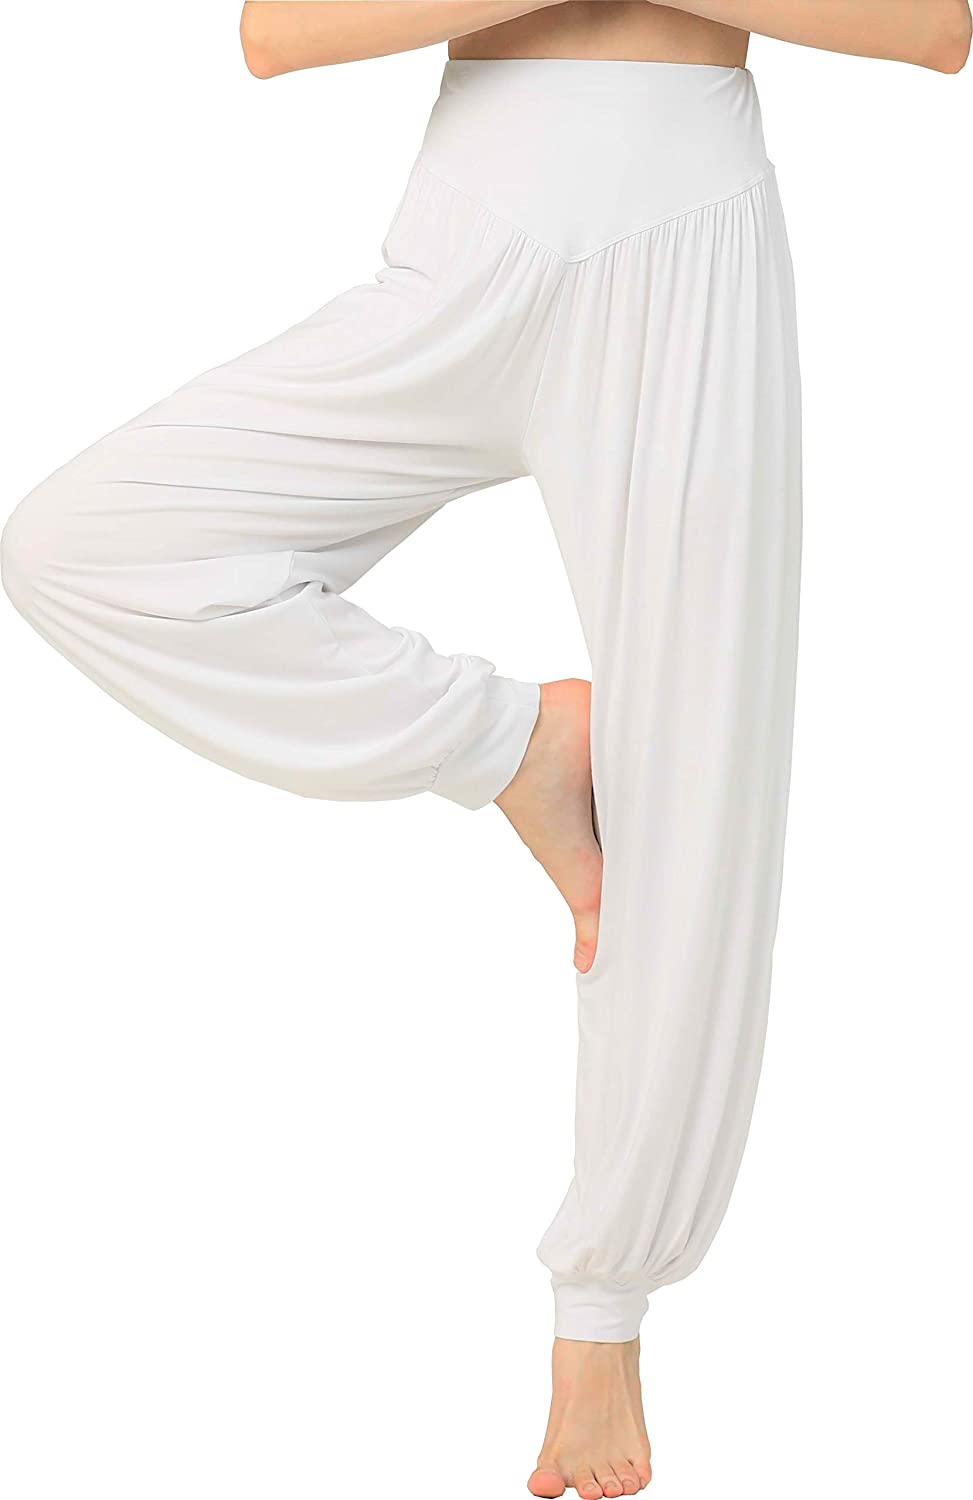 Pantalones harem marca Hoerev, modal súper suave, yoga, pilates